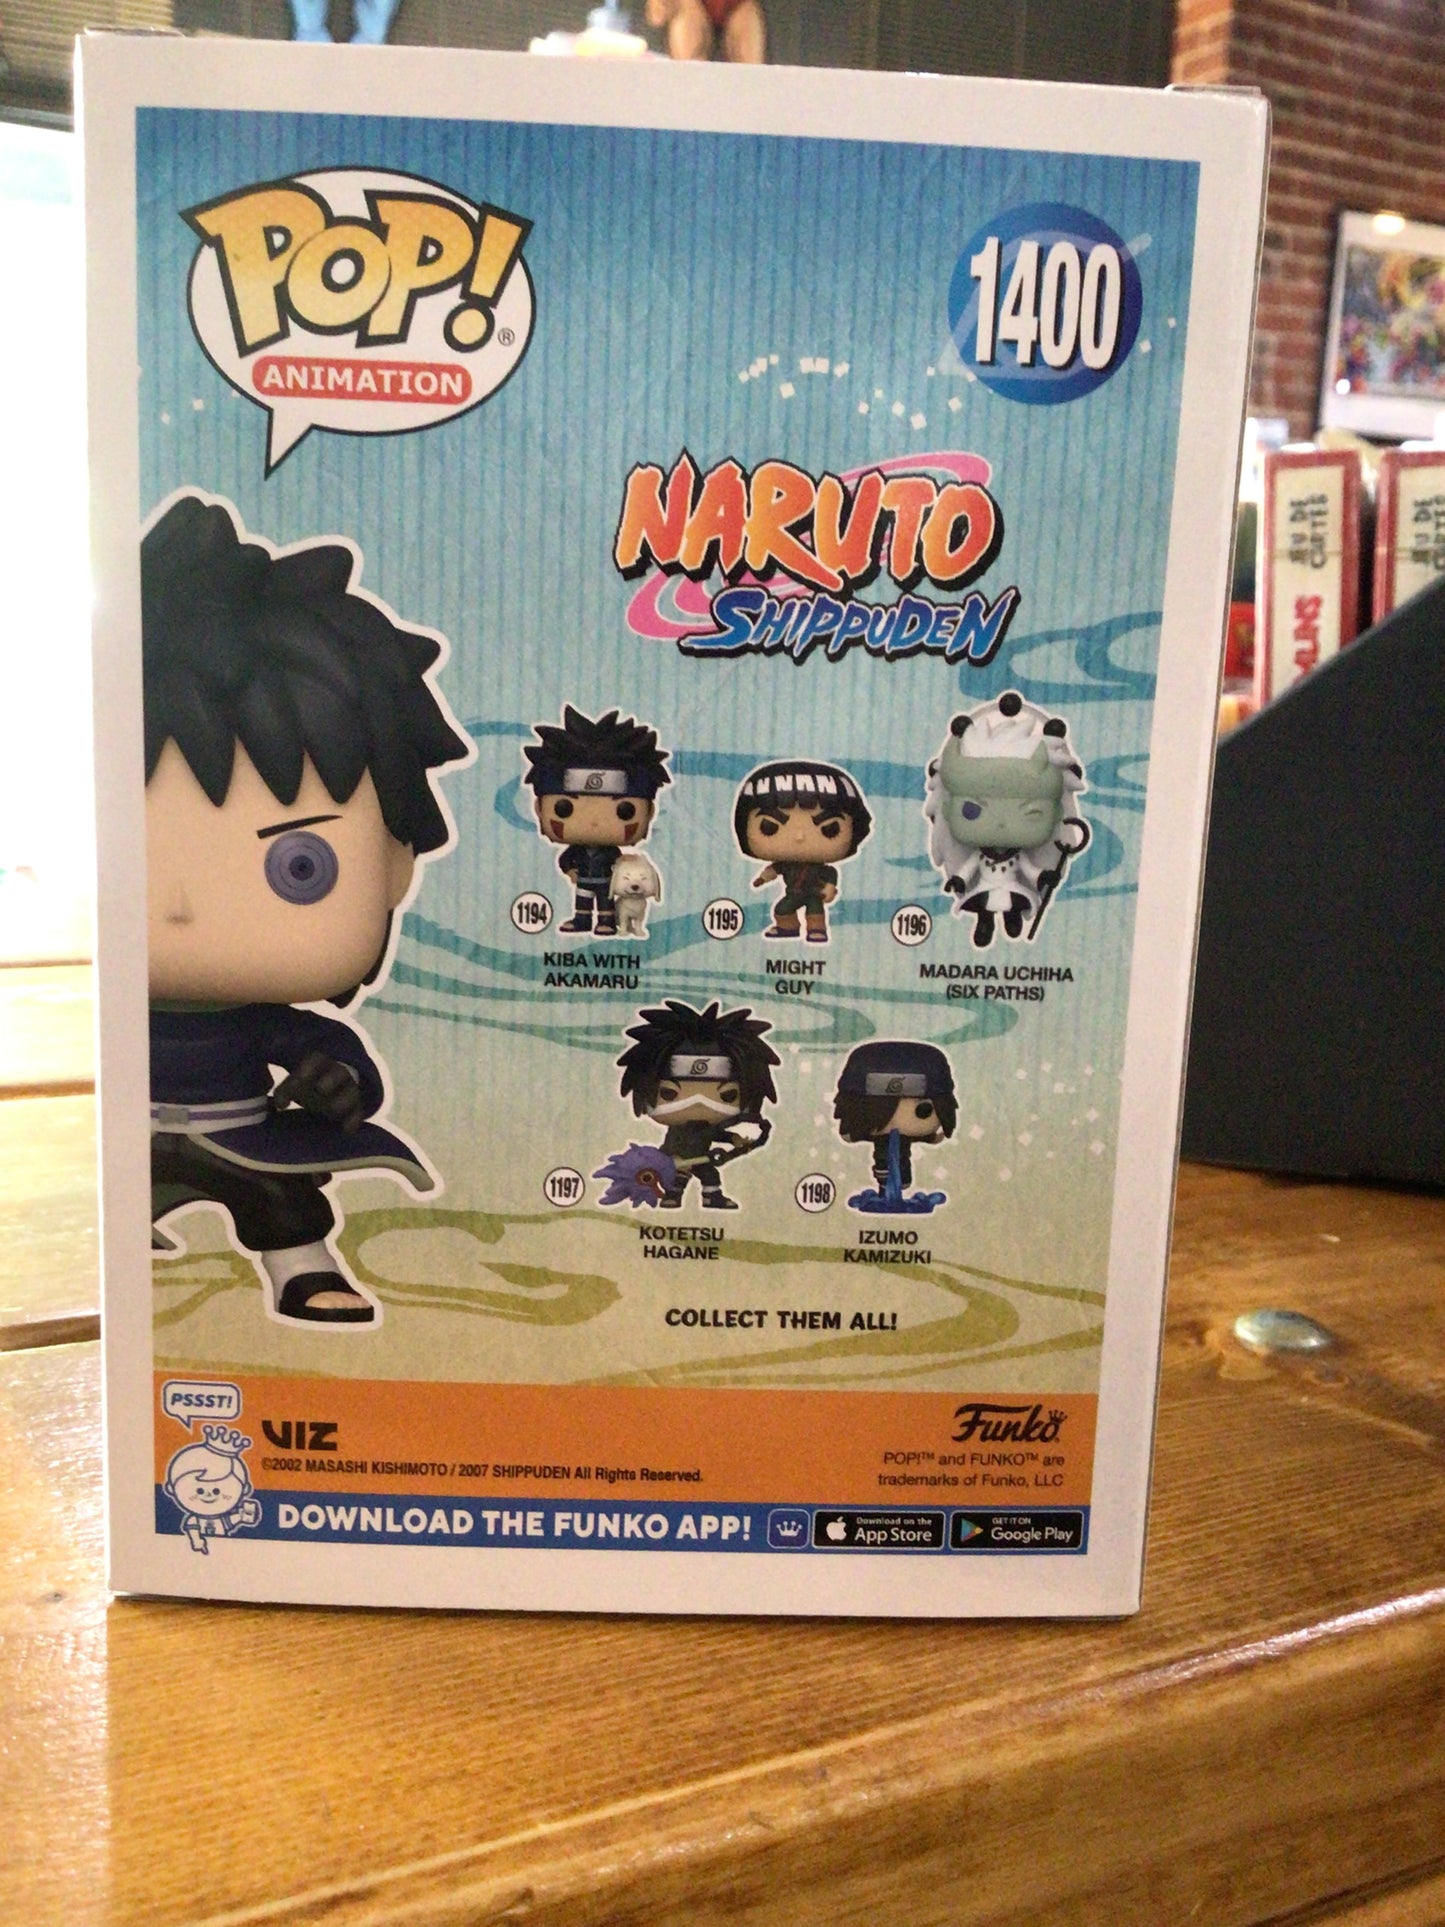 Naruto Obito Uchiha Funko Pop! Vinyl Figure anime